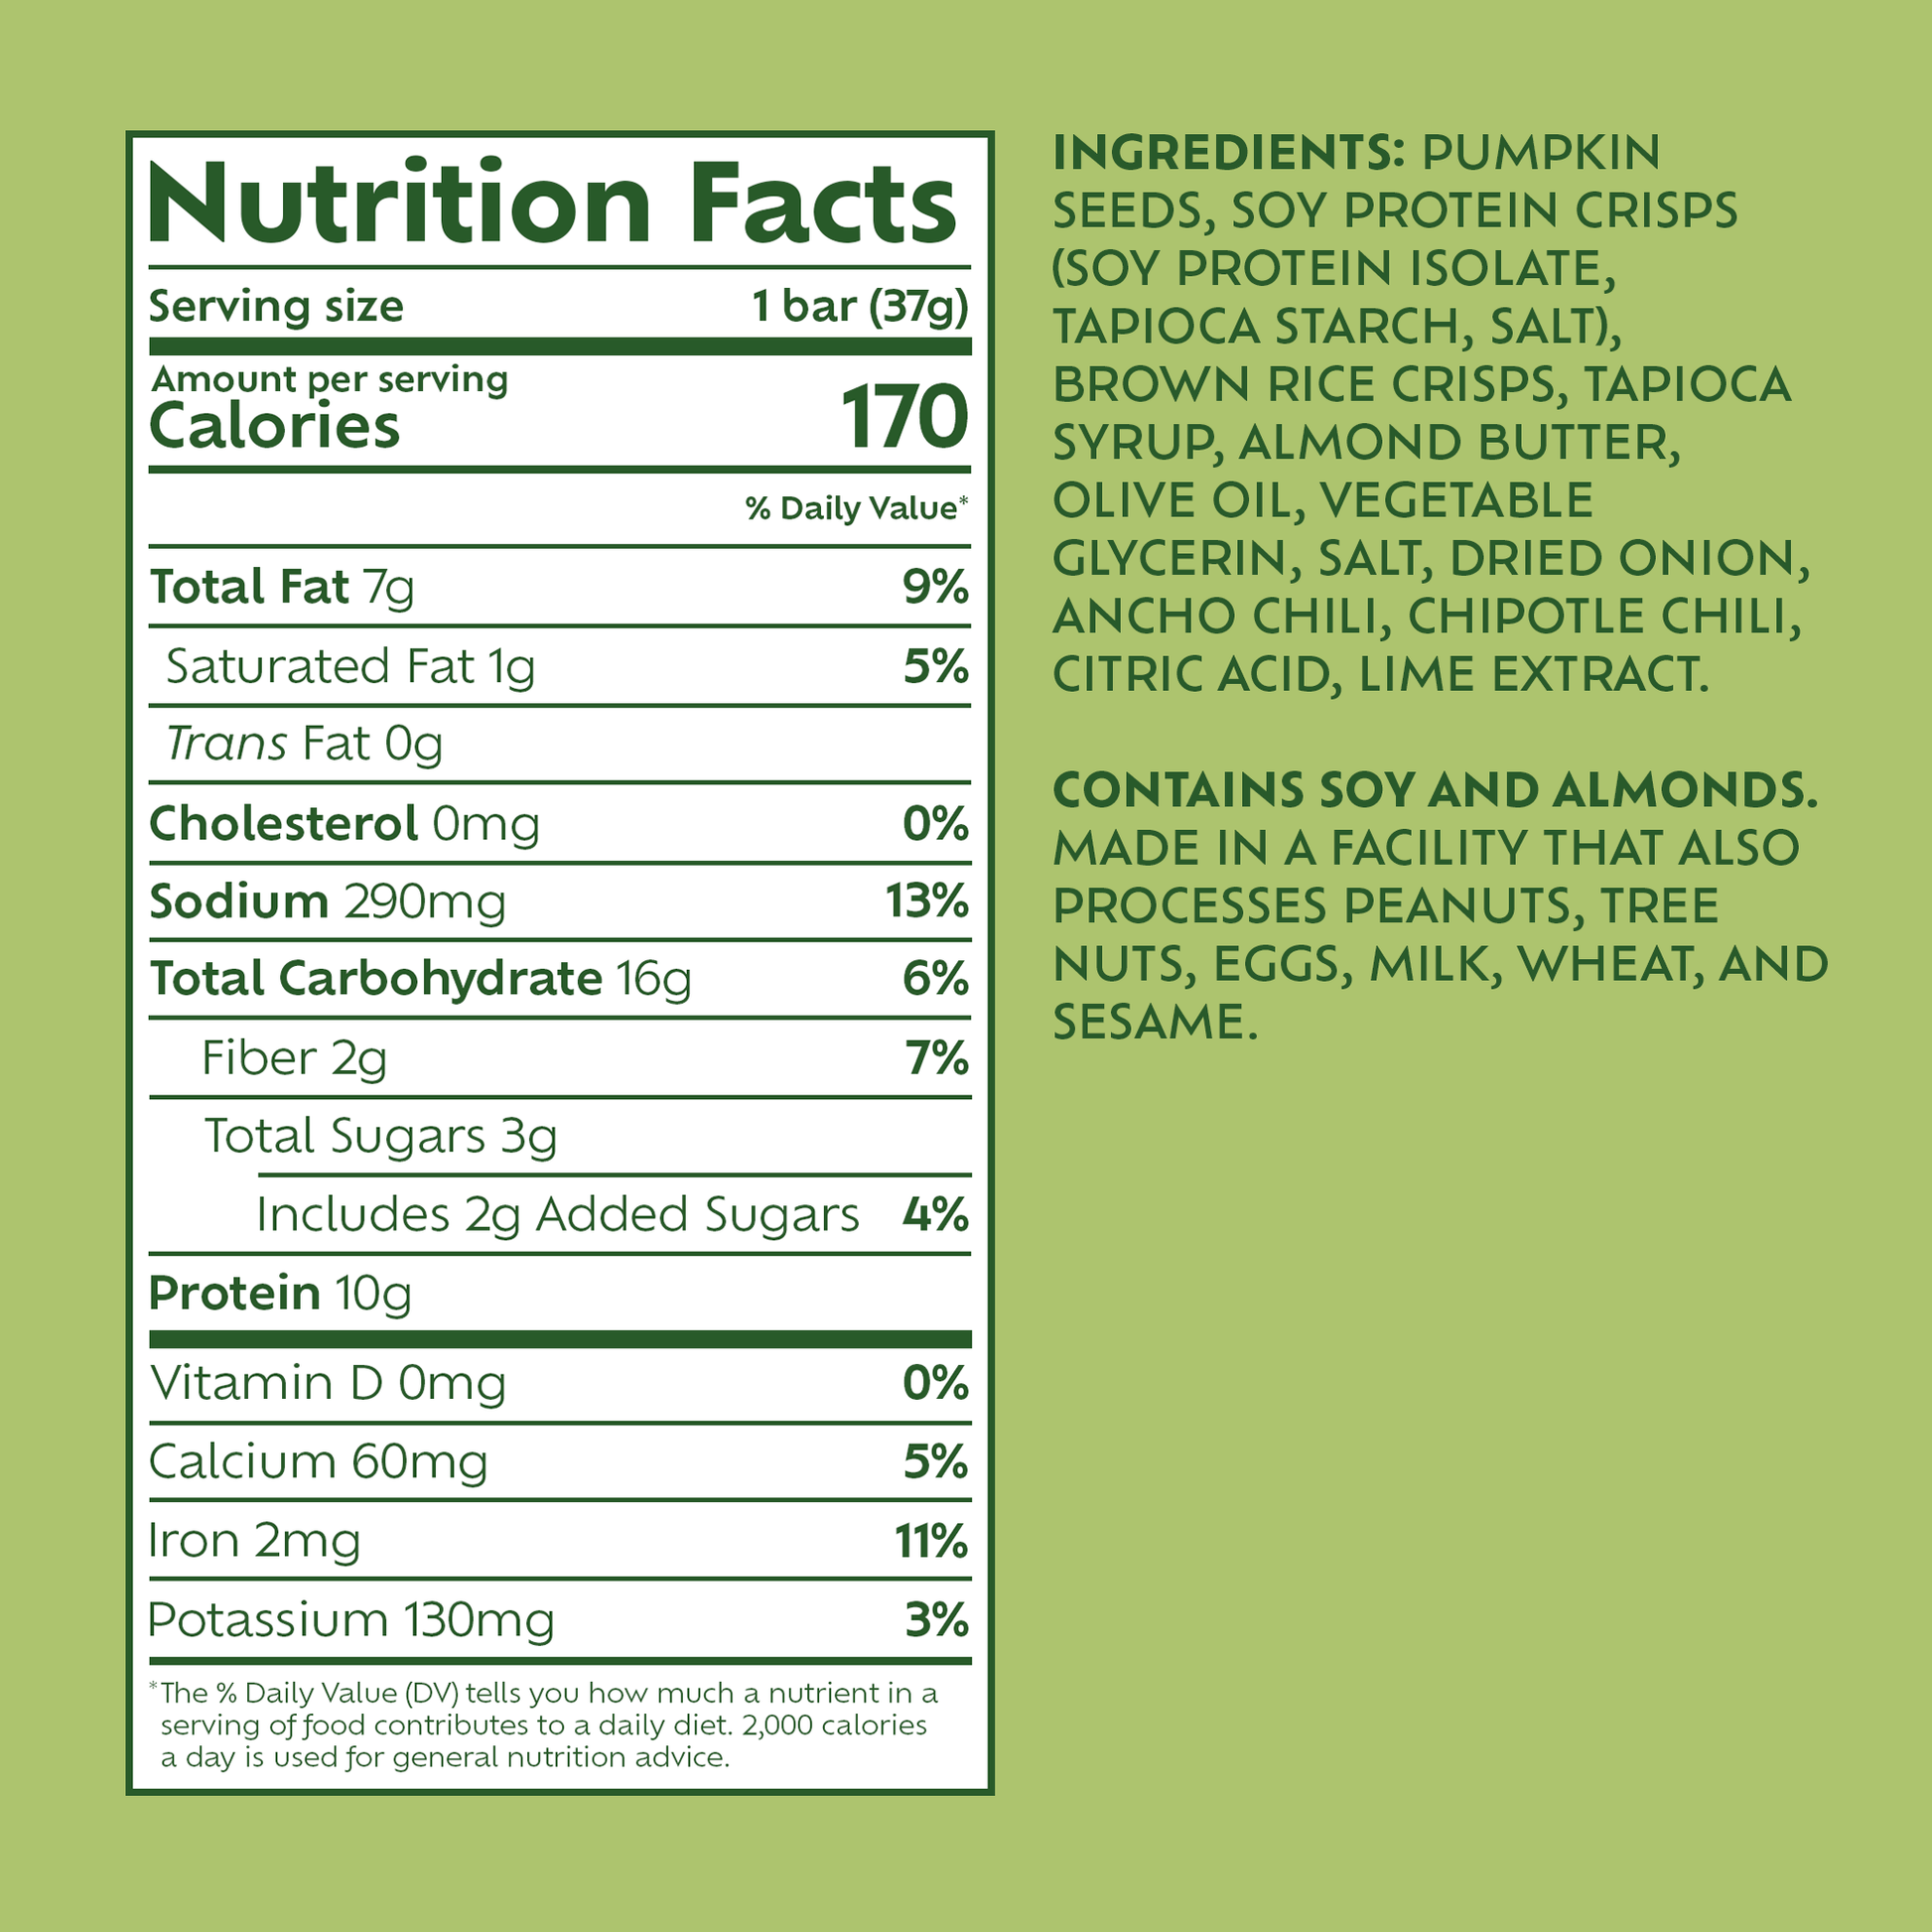 Afar's Chili Lime protein bars have 170 calories, 8g fat, 270mg sodium, 16g carbs, 2g fiber, 3g sugar, and 10g protein each.